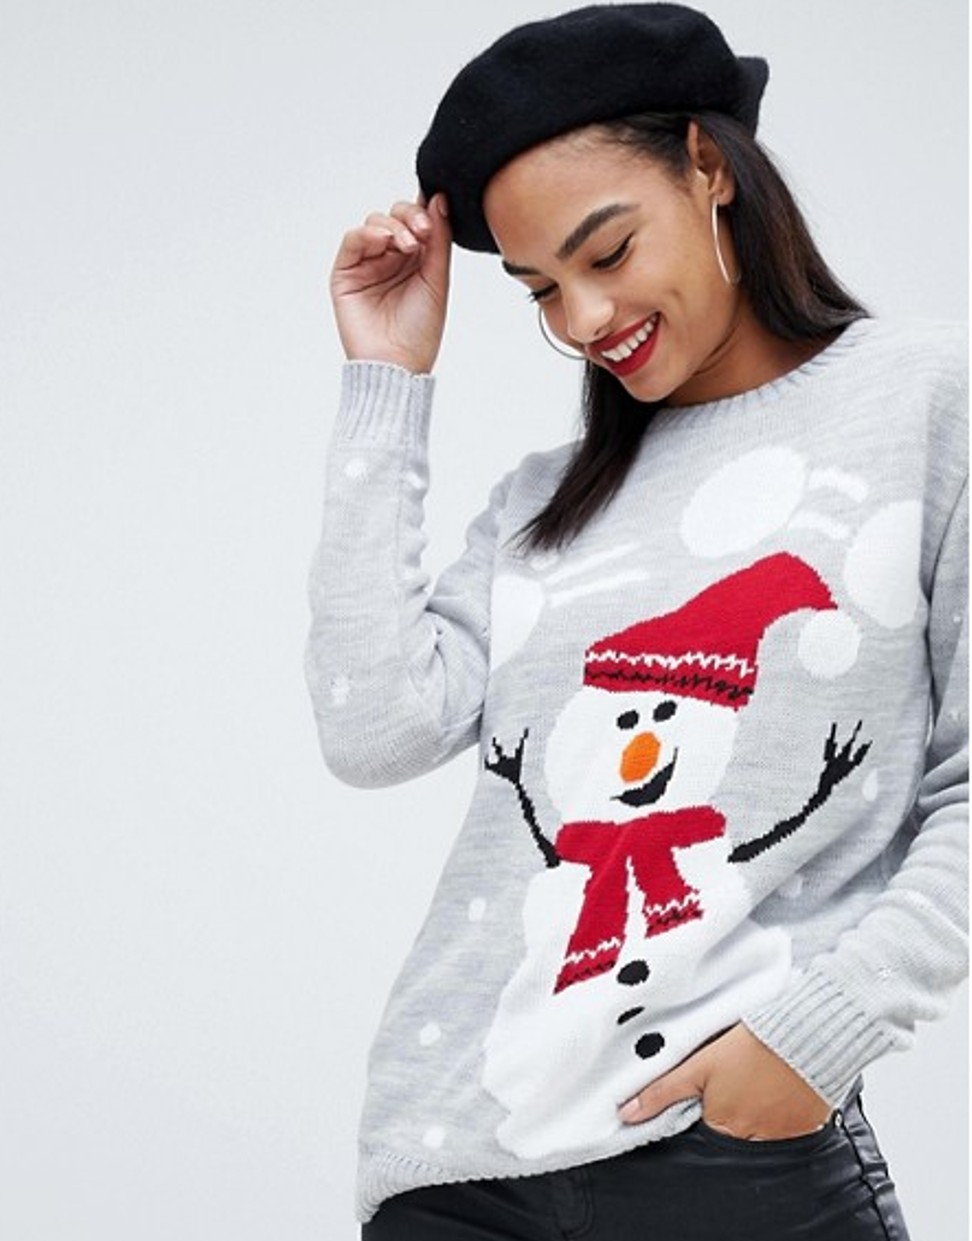 Club L Christmas jumper with snowman design.